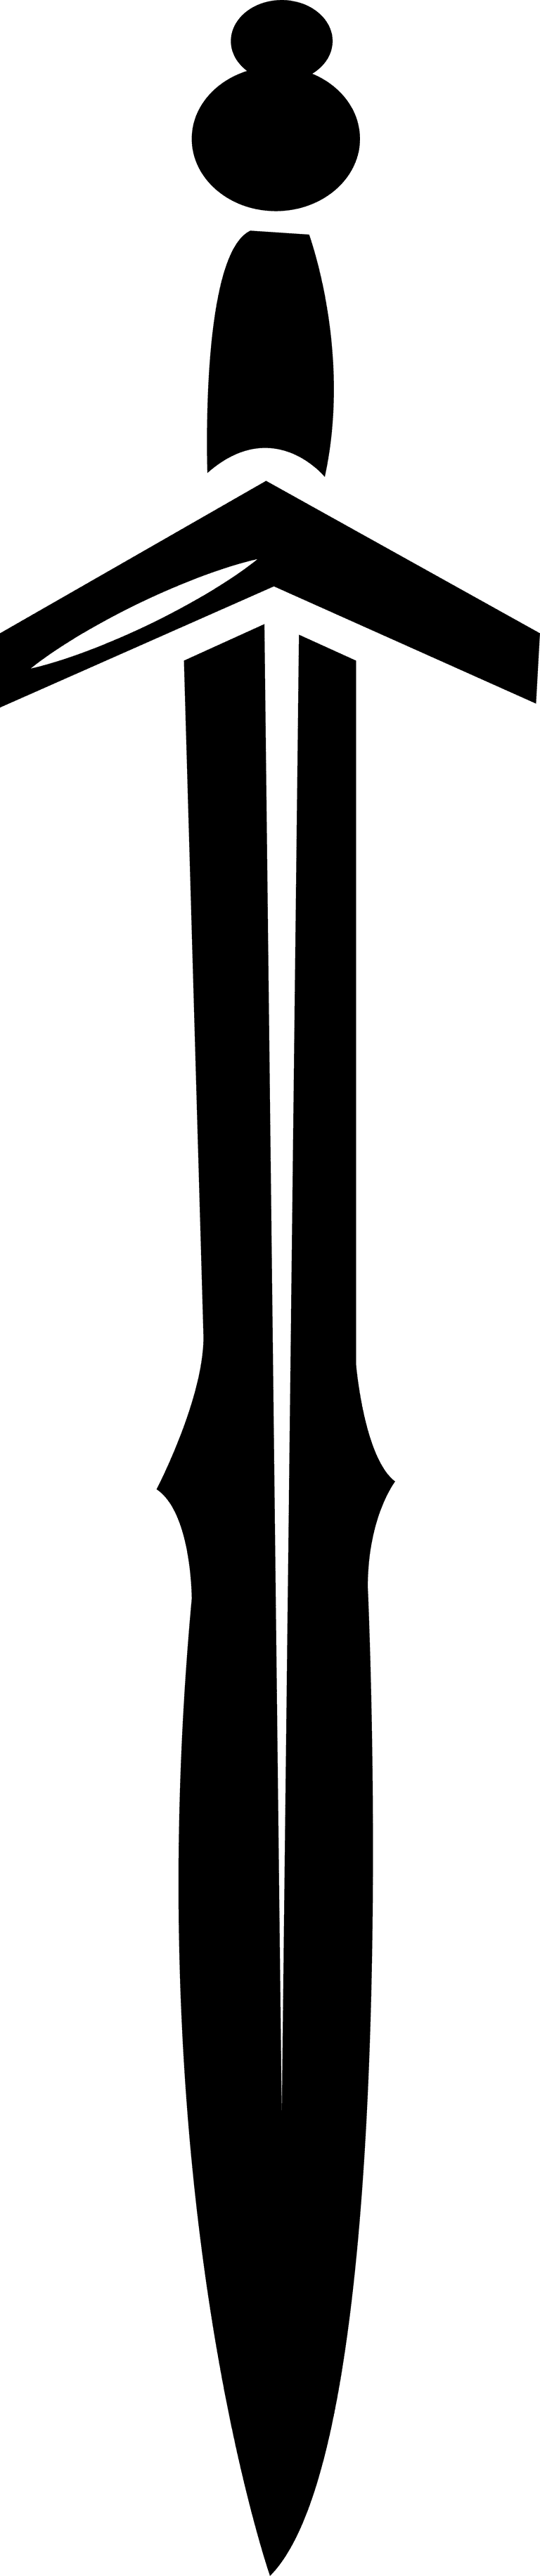 isolated sword symbols, sword silhouette 